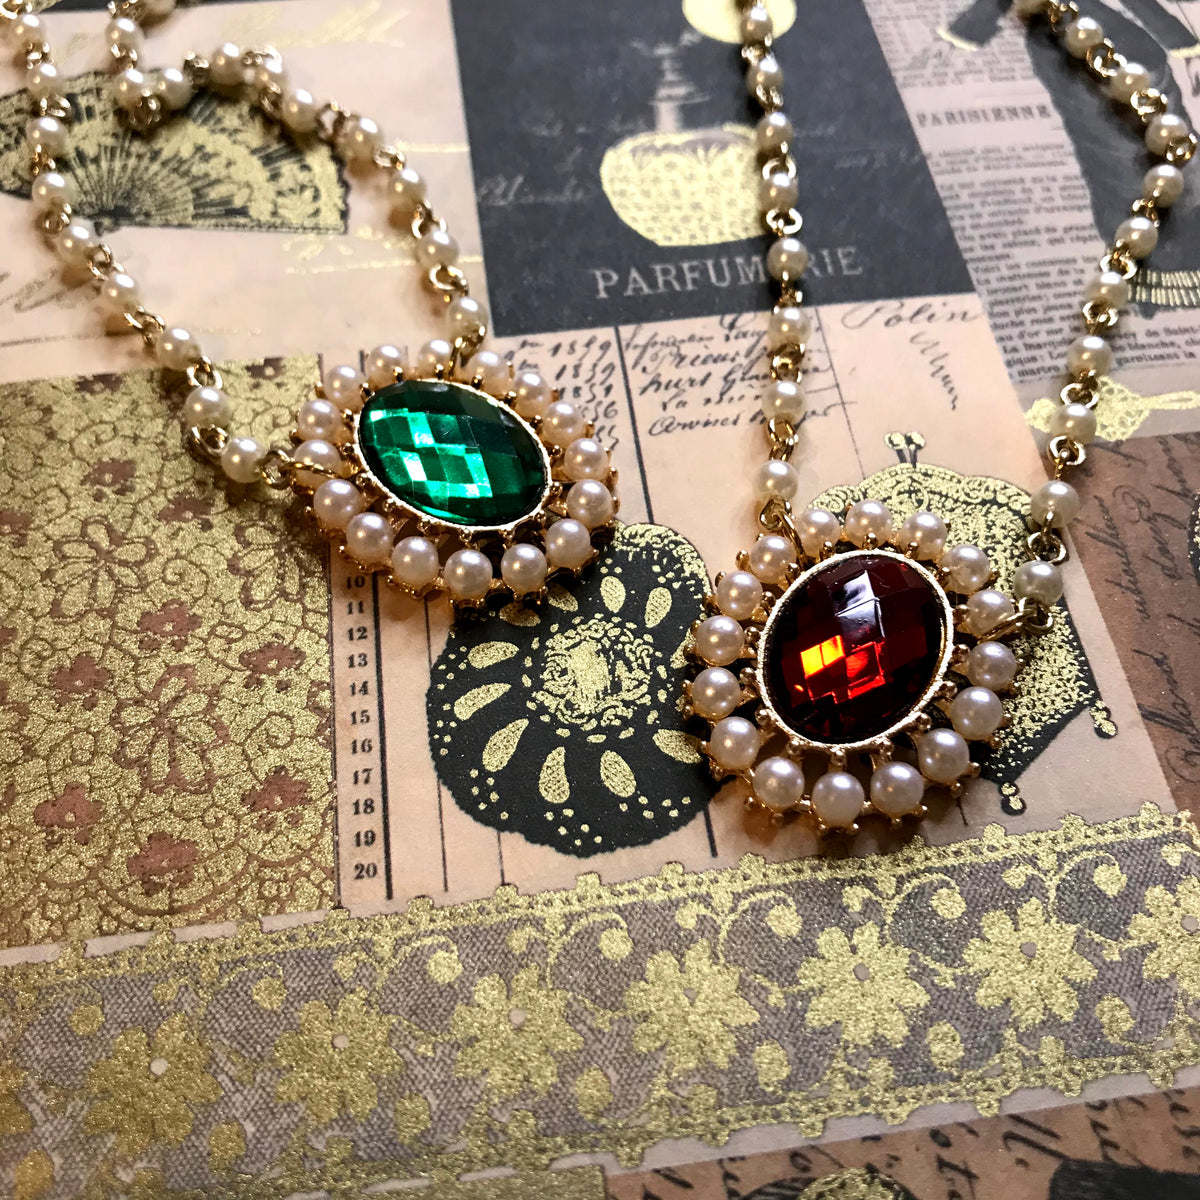 Necklace in My Grandma’s Jewelry Box